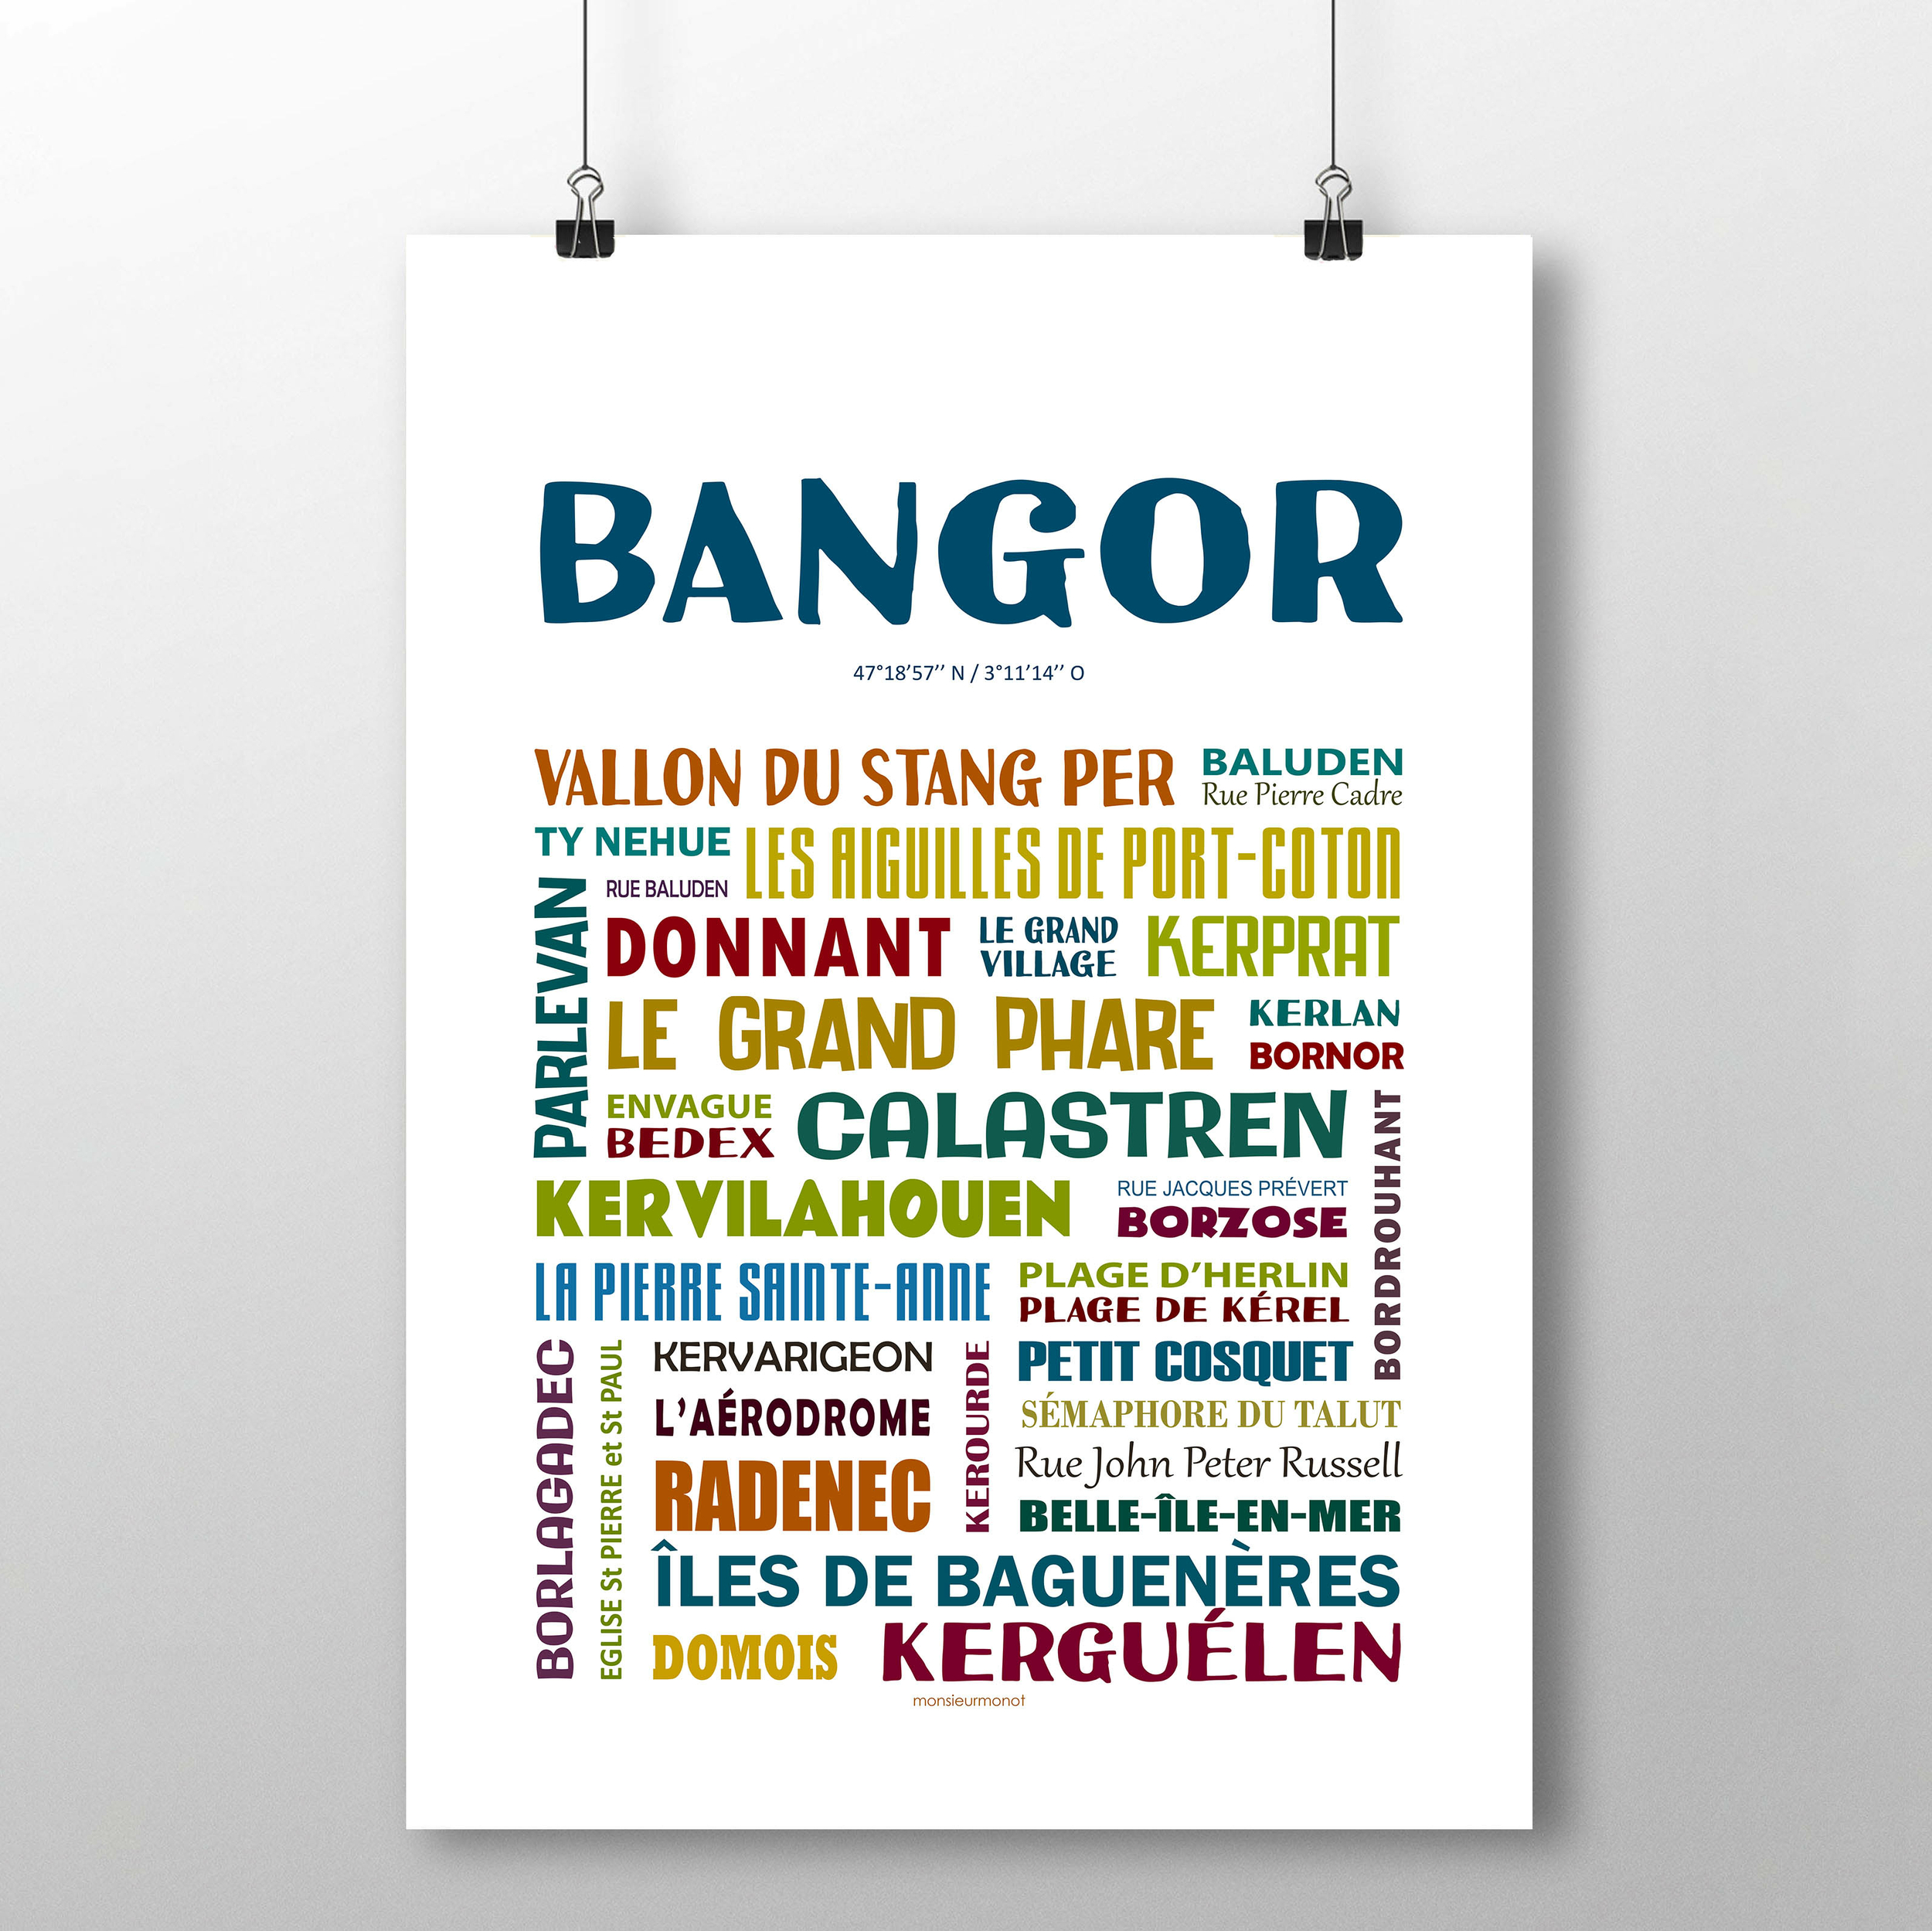 Bangor 2